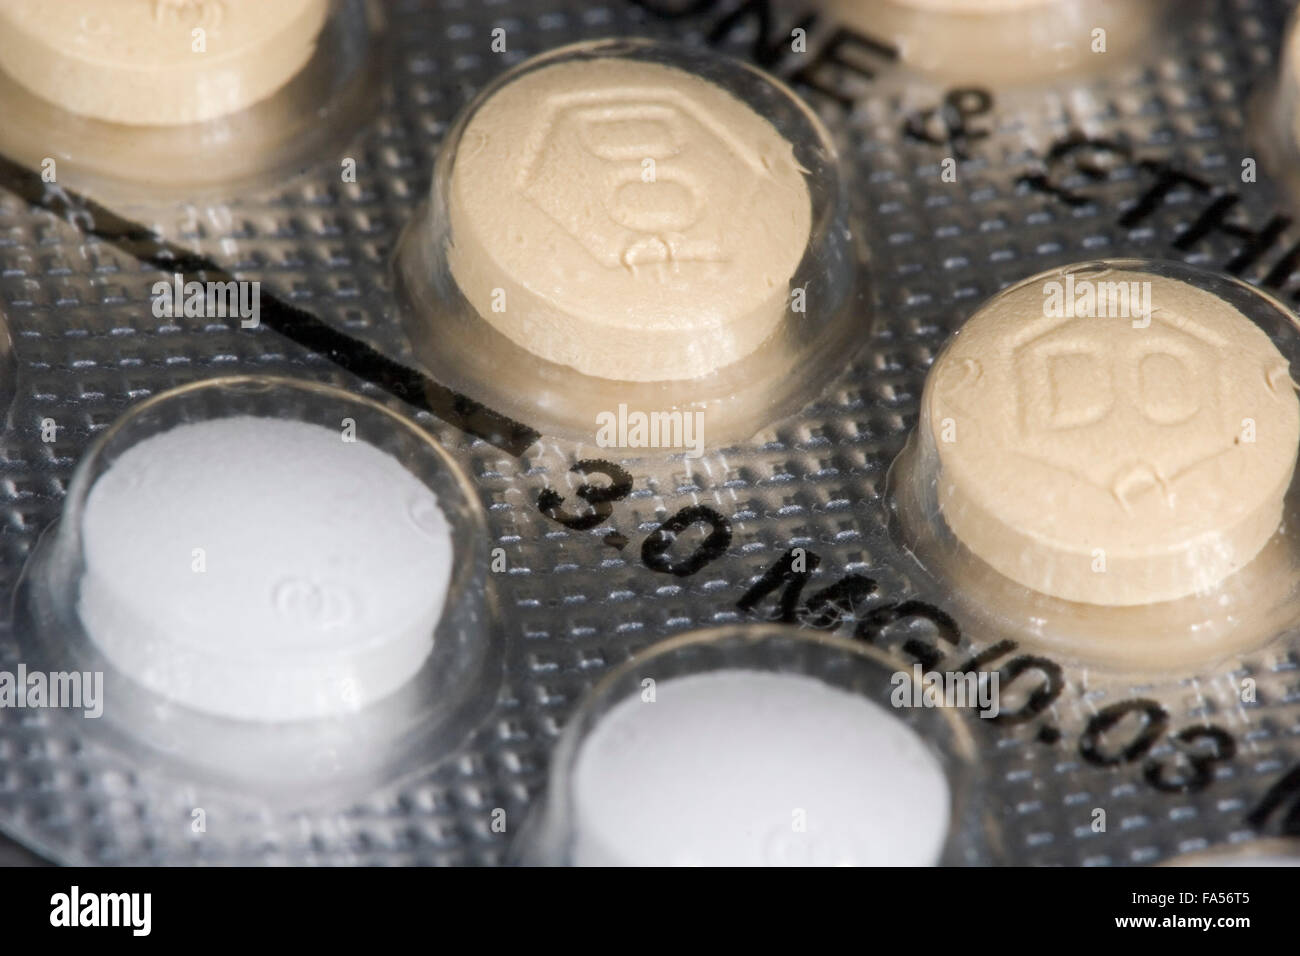 La pilule contraceptive Yasmin. La drospirénone et éthinylestradiol comprimés, 3.0MG. Banque D'Images